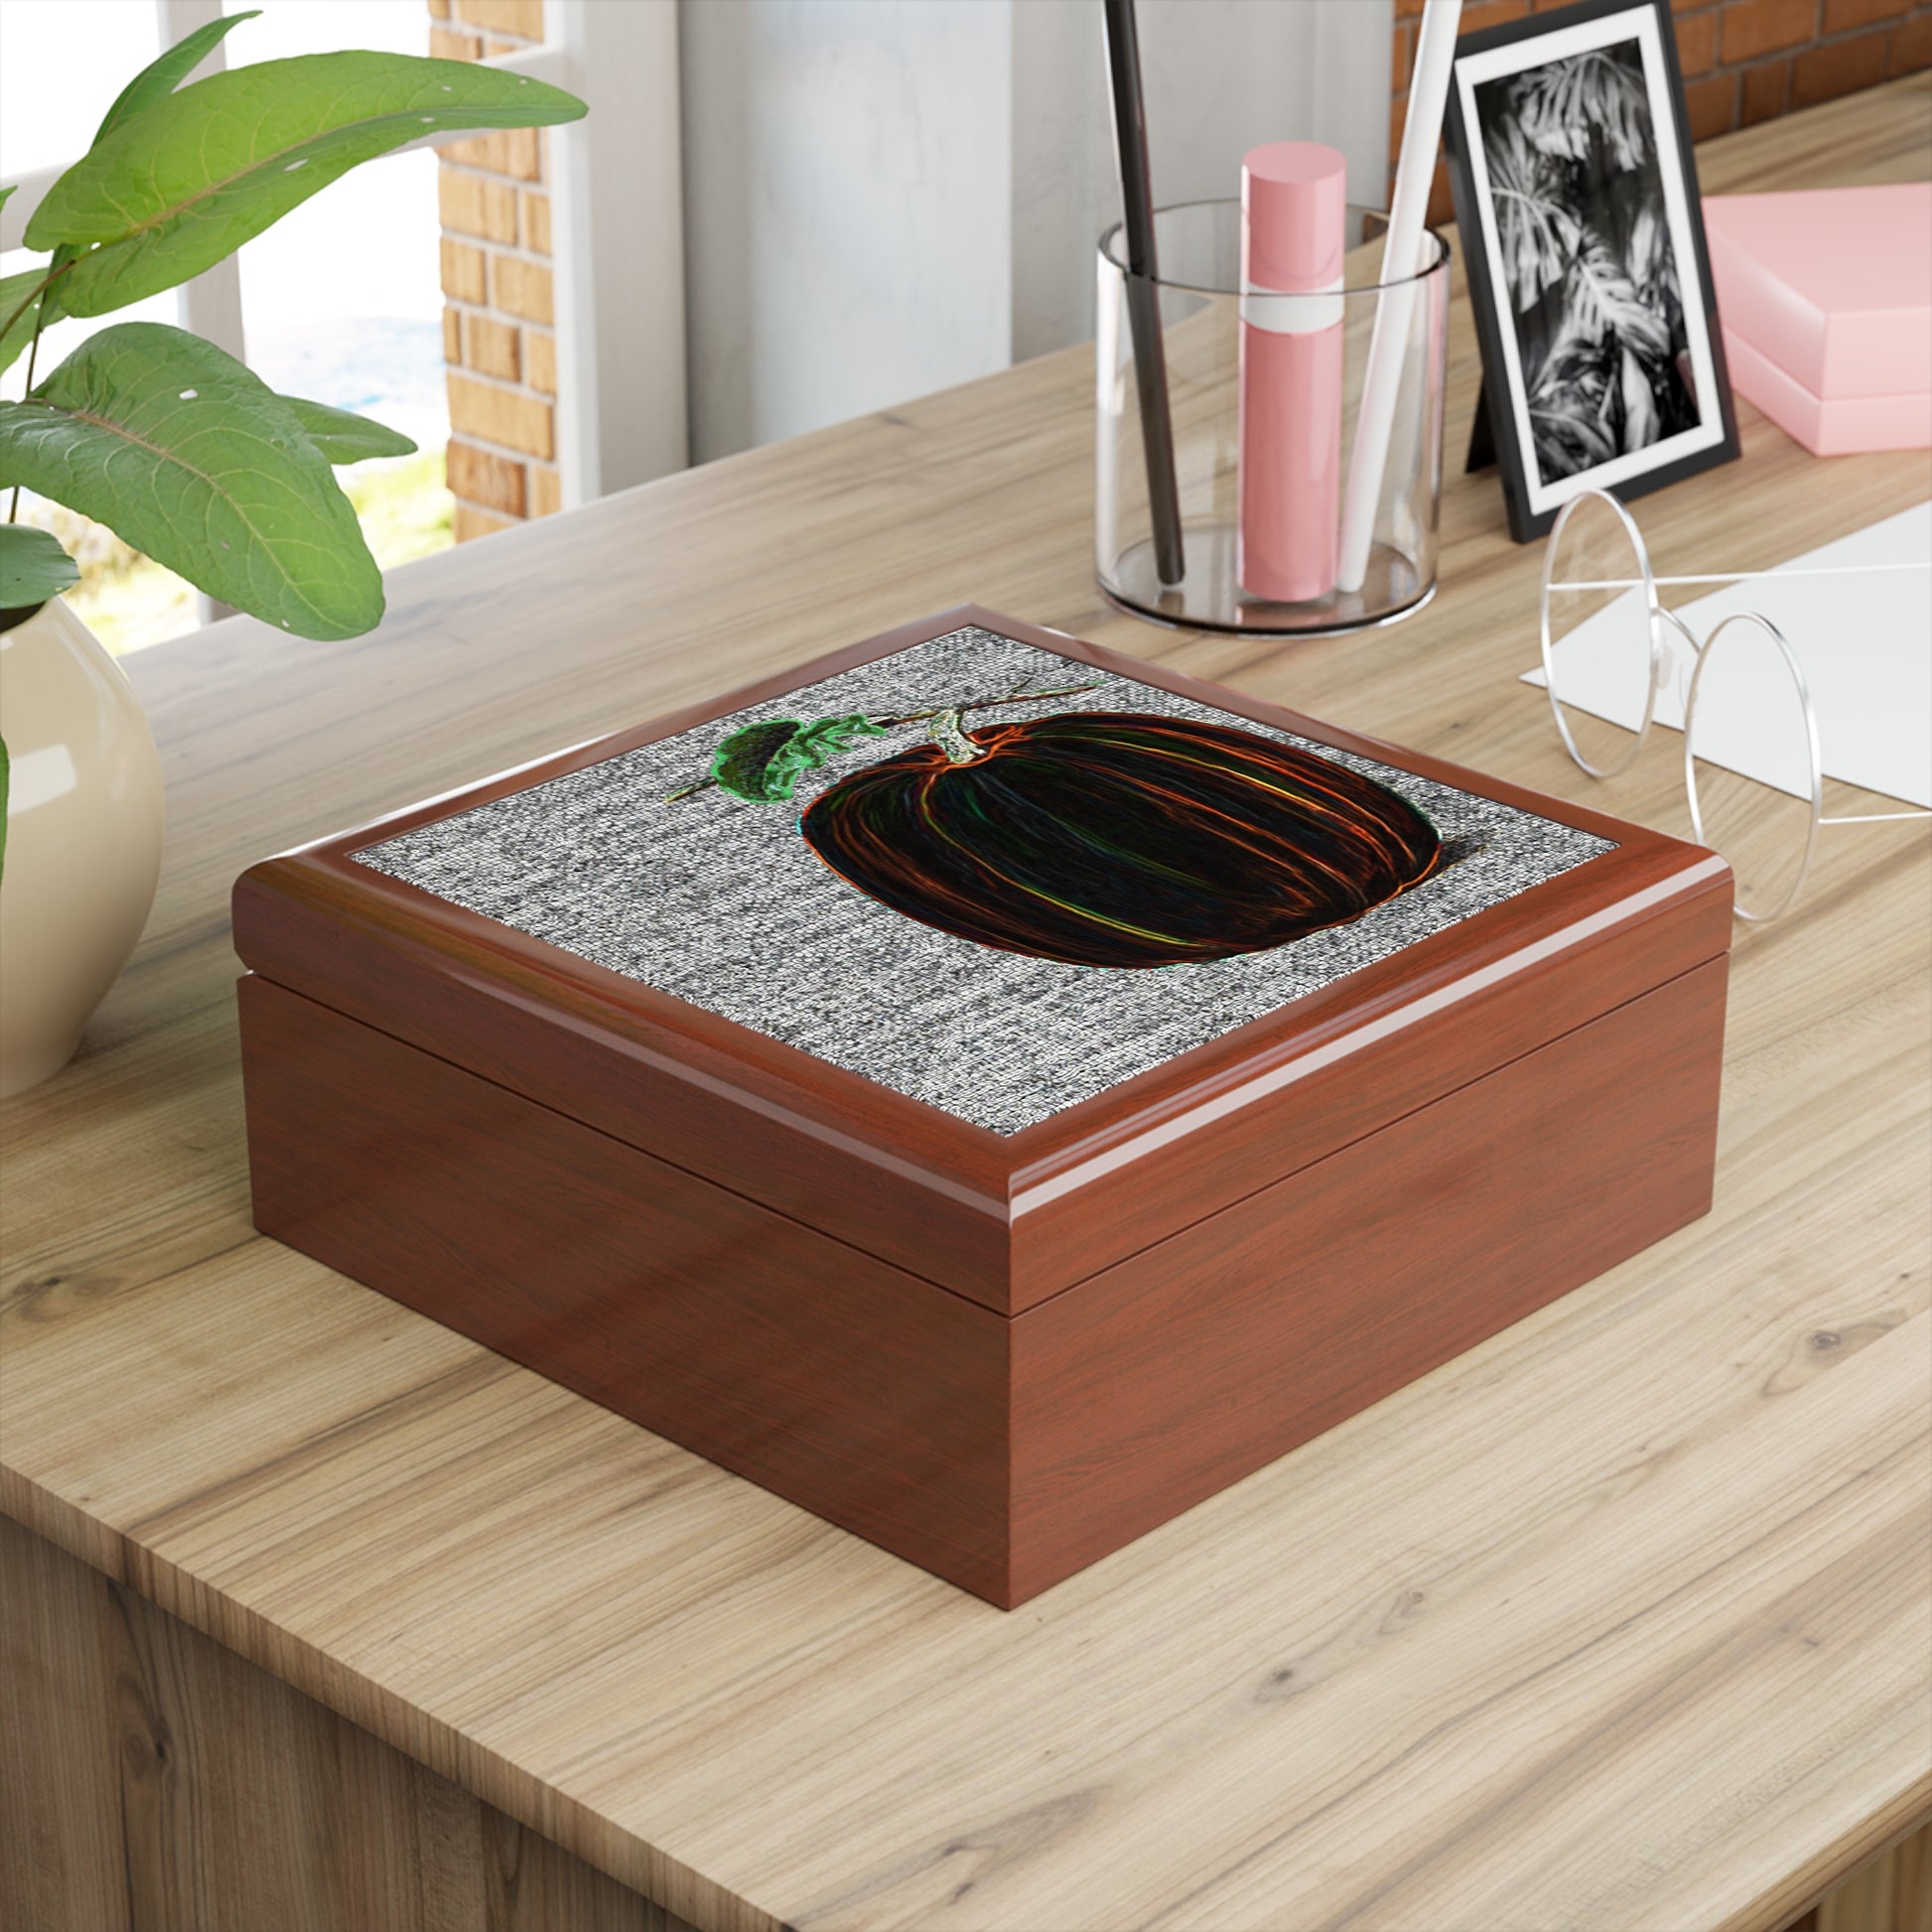 Keepsake/Jewelry Box - Magical Pumpkin - Lacquer Wood Box  golden oak box